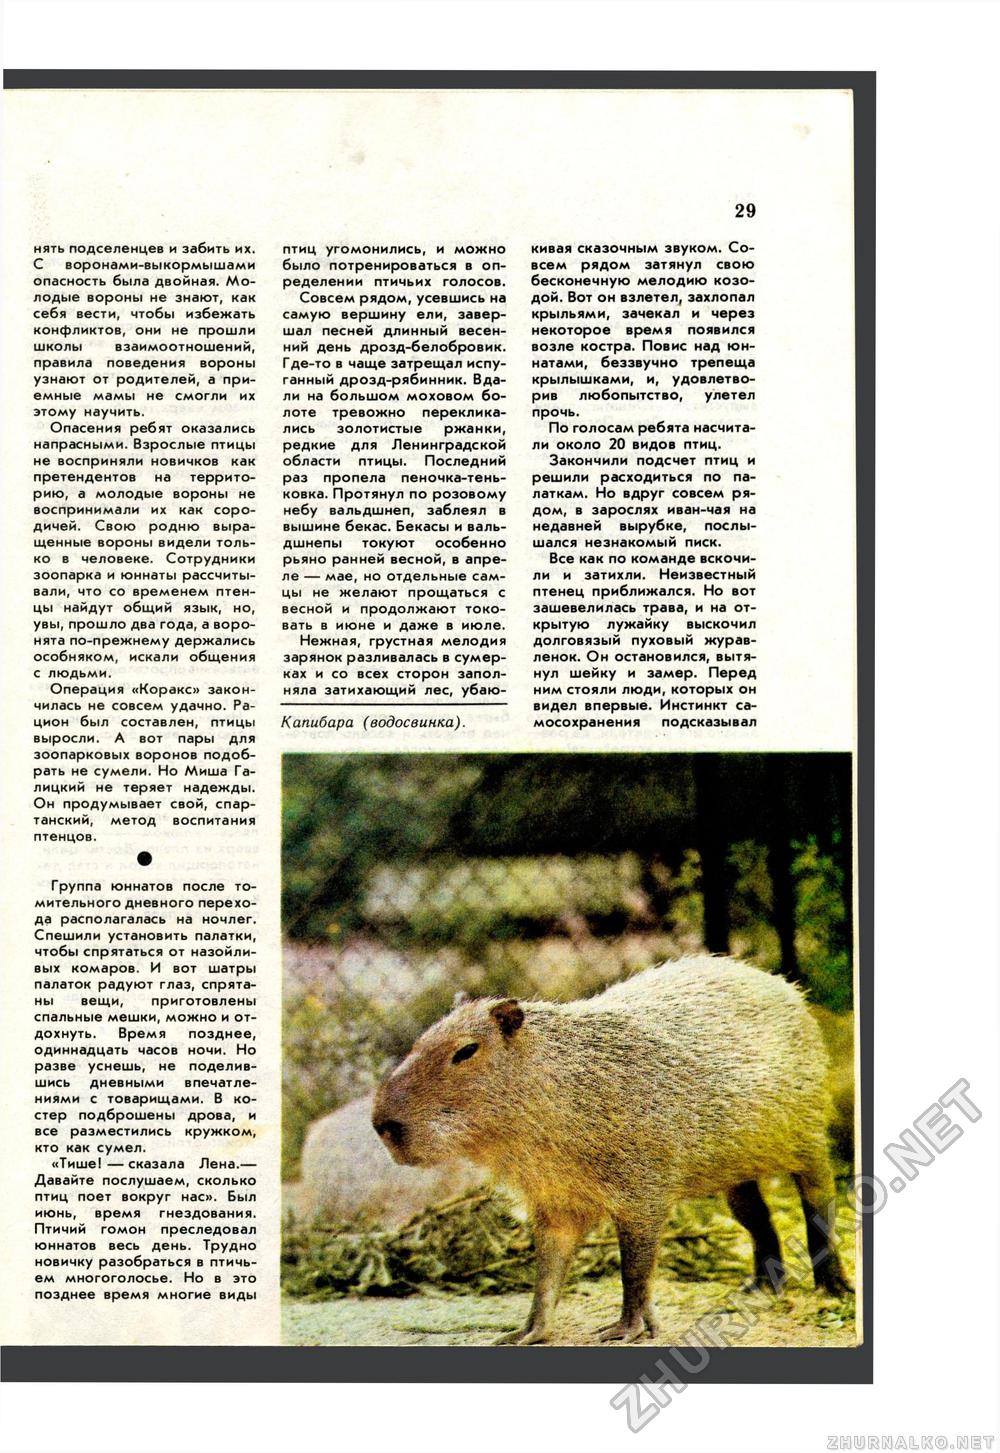 Юный Натуралист 1984-05, страница 31